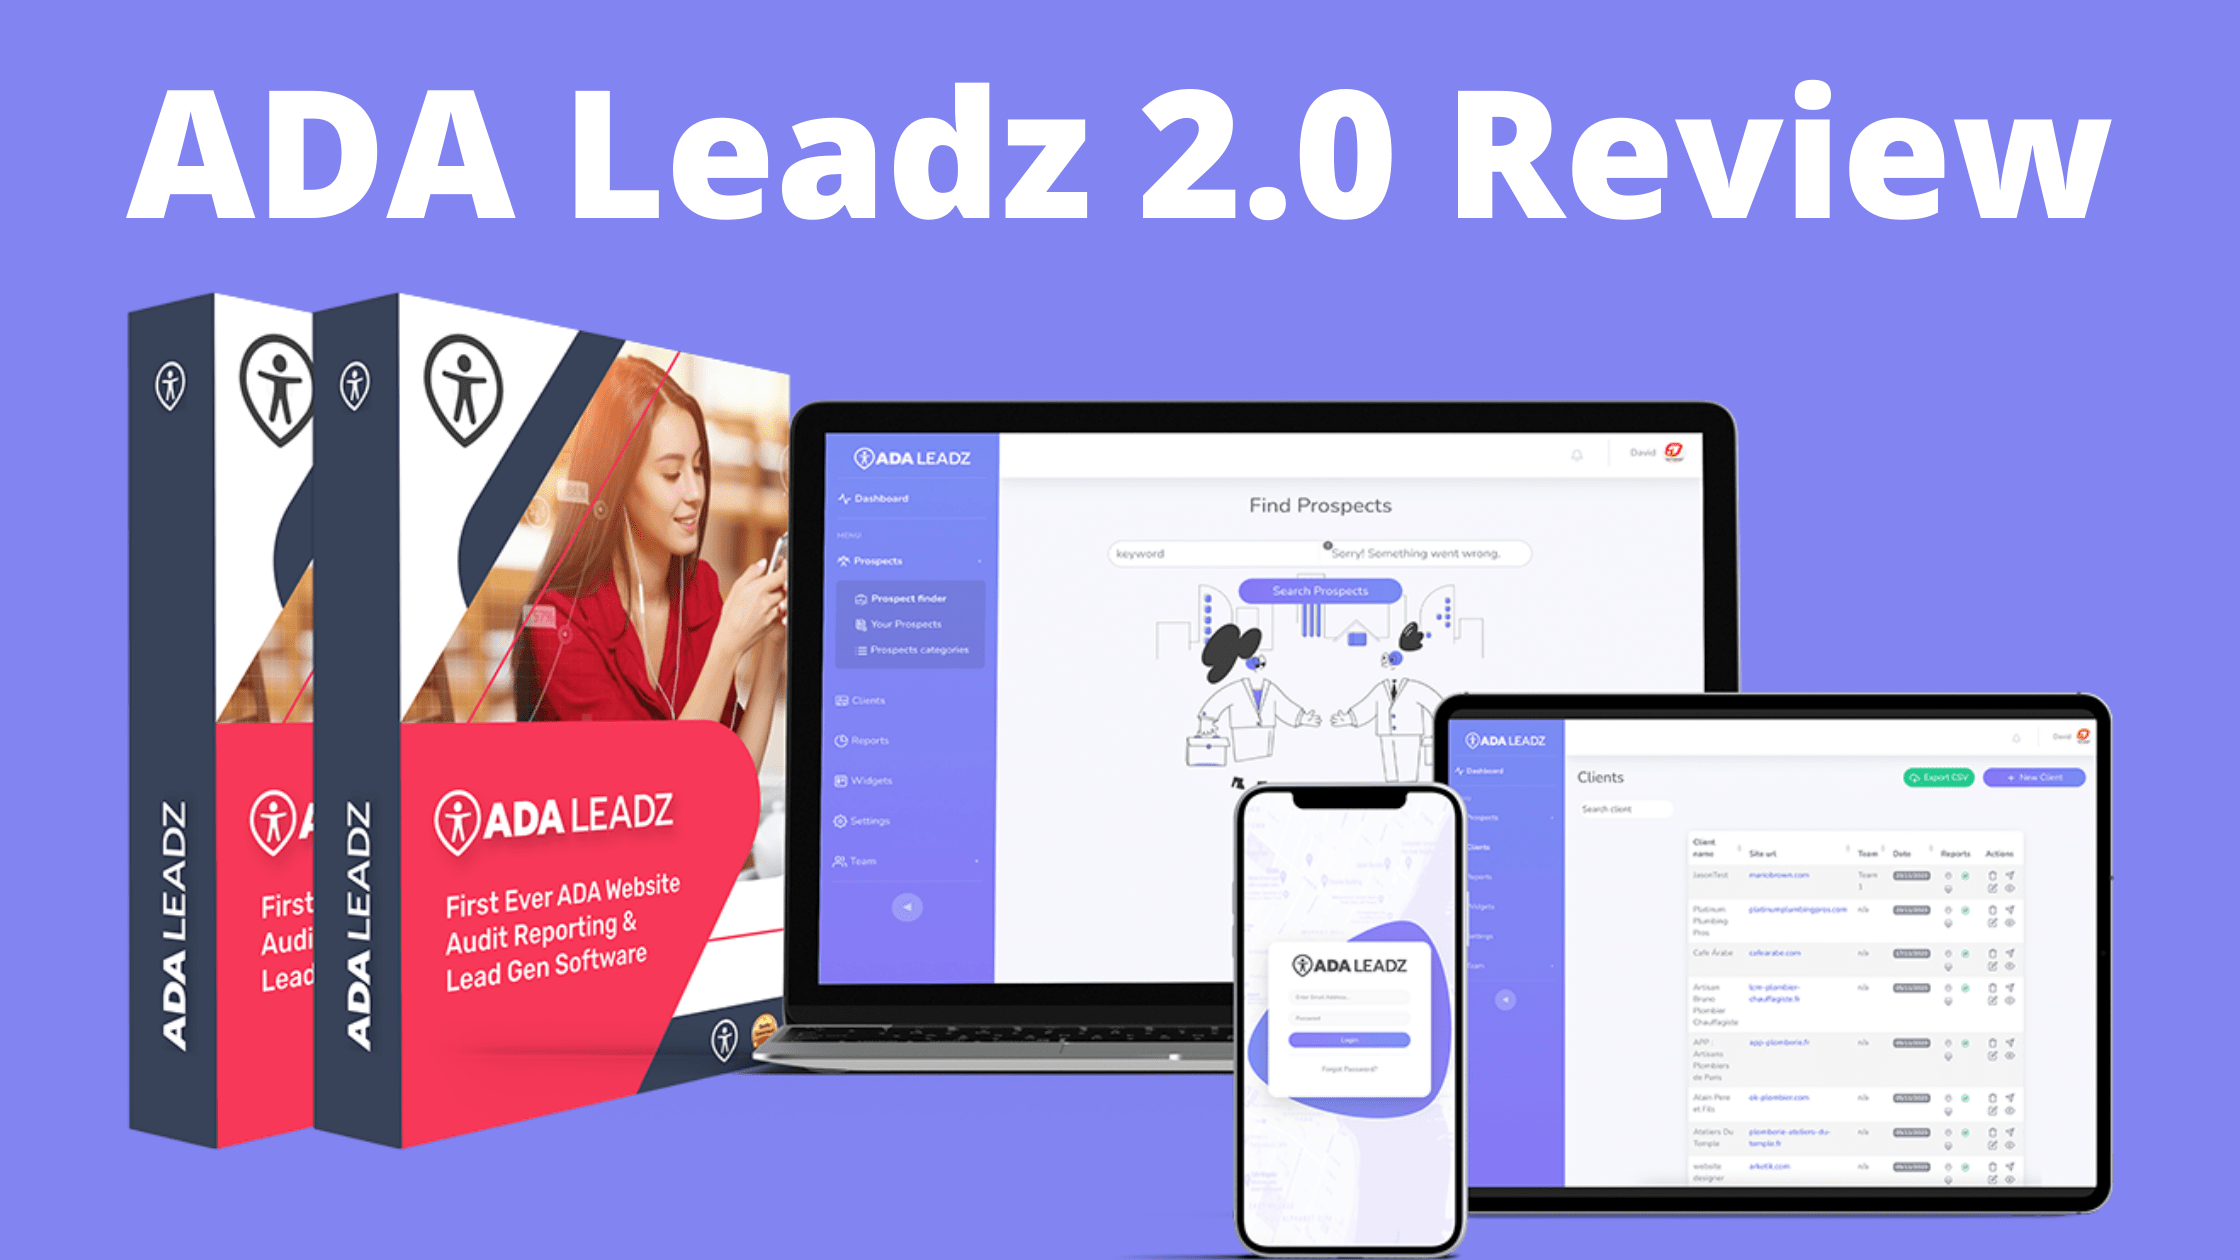 ADA Leadz 2.0 Review